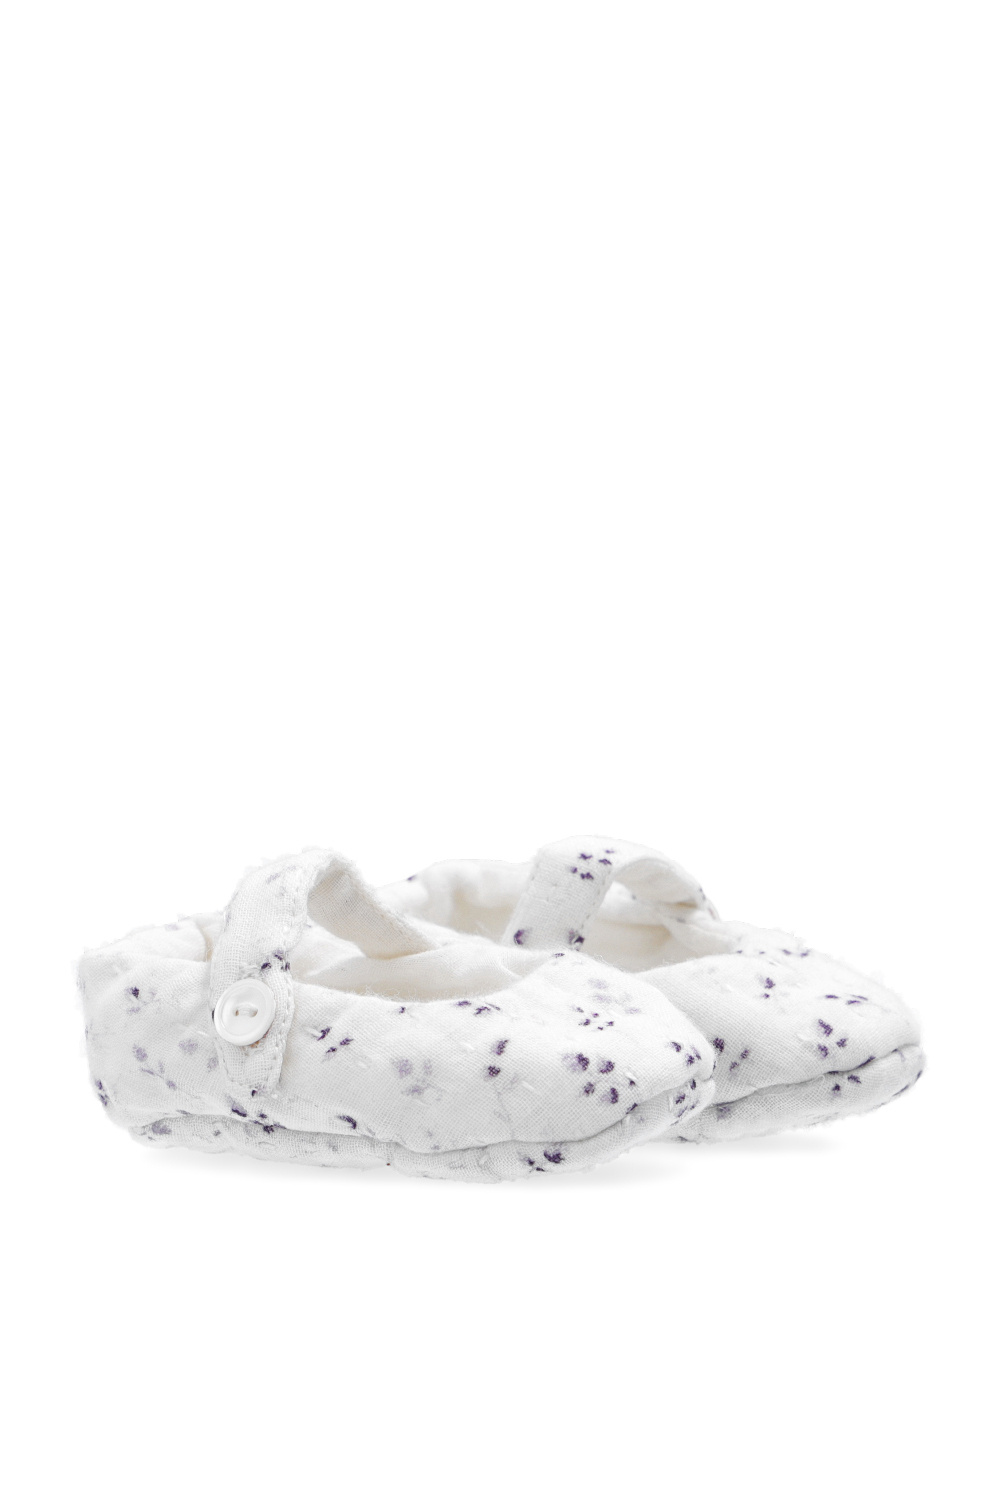 Bonpoint  Shoes with floral motif